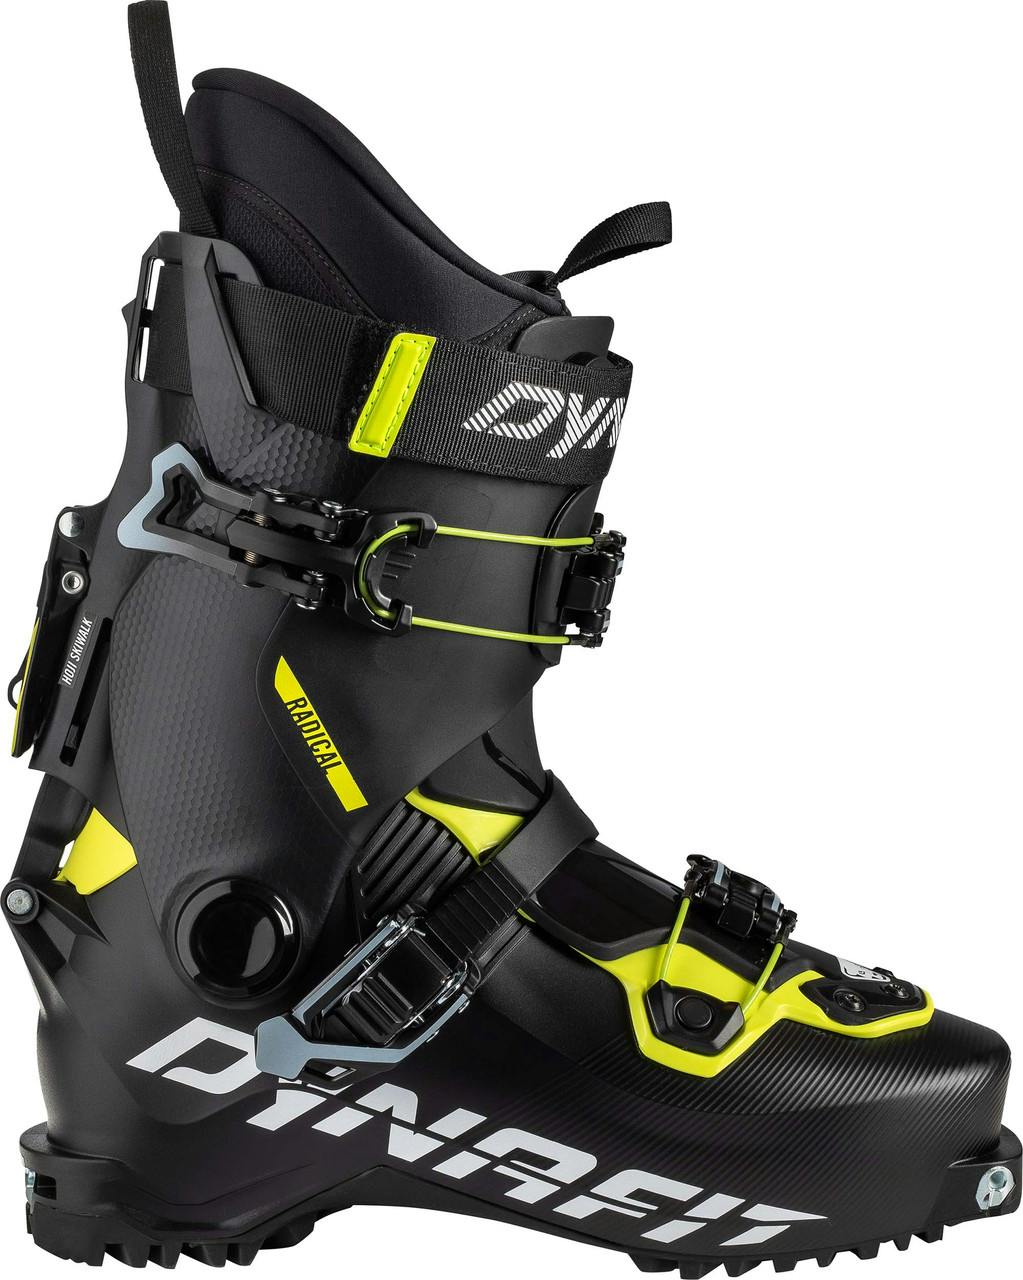 Radical Ski Boots Black/Neon Yellow